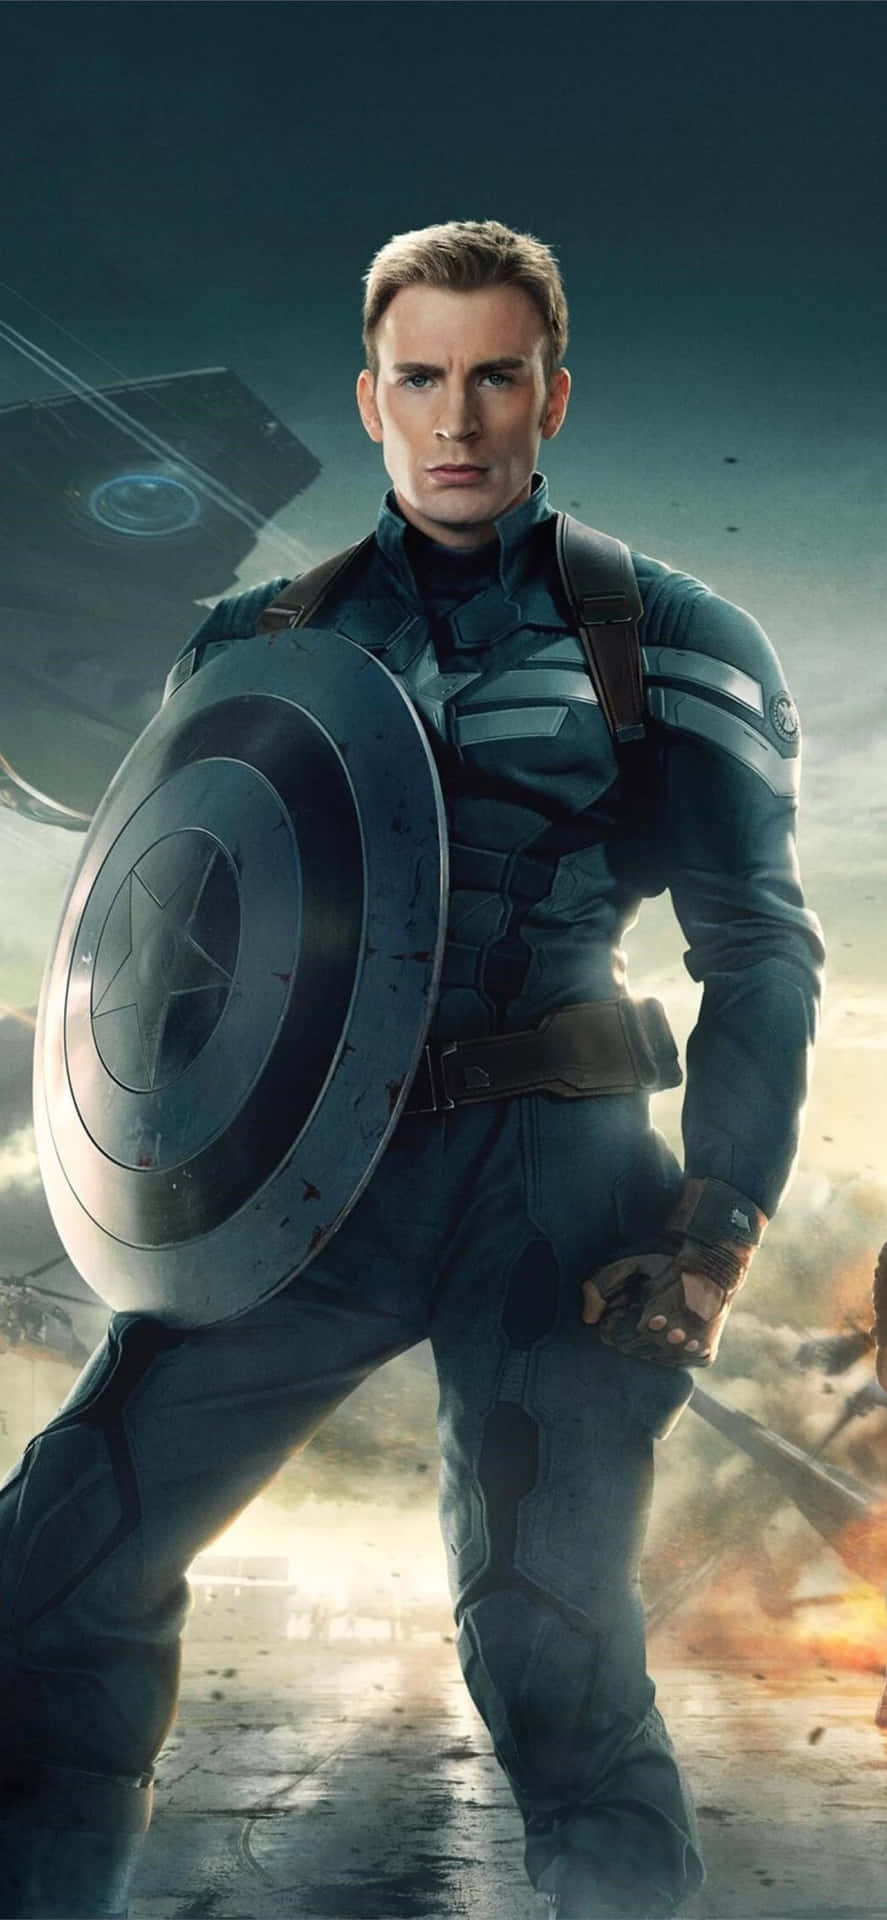 MCU Hero Steve Rogers Captain America The Winter Soldier Background